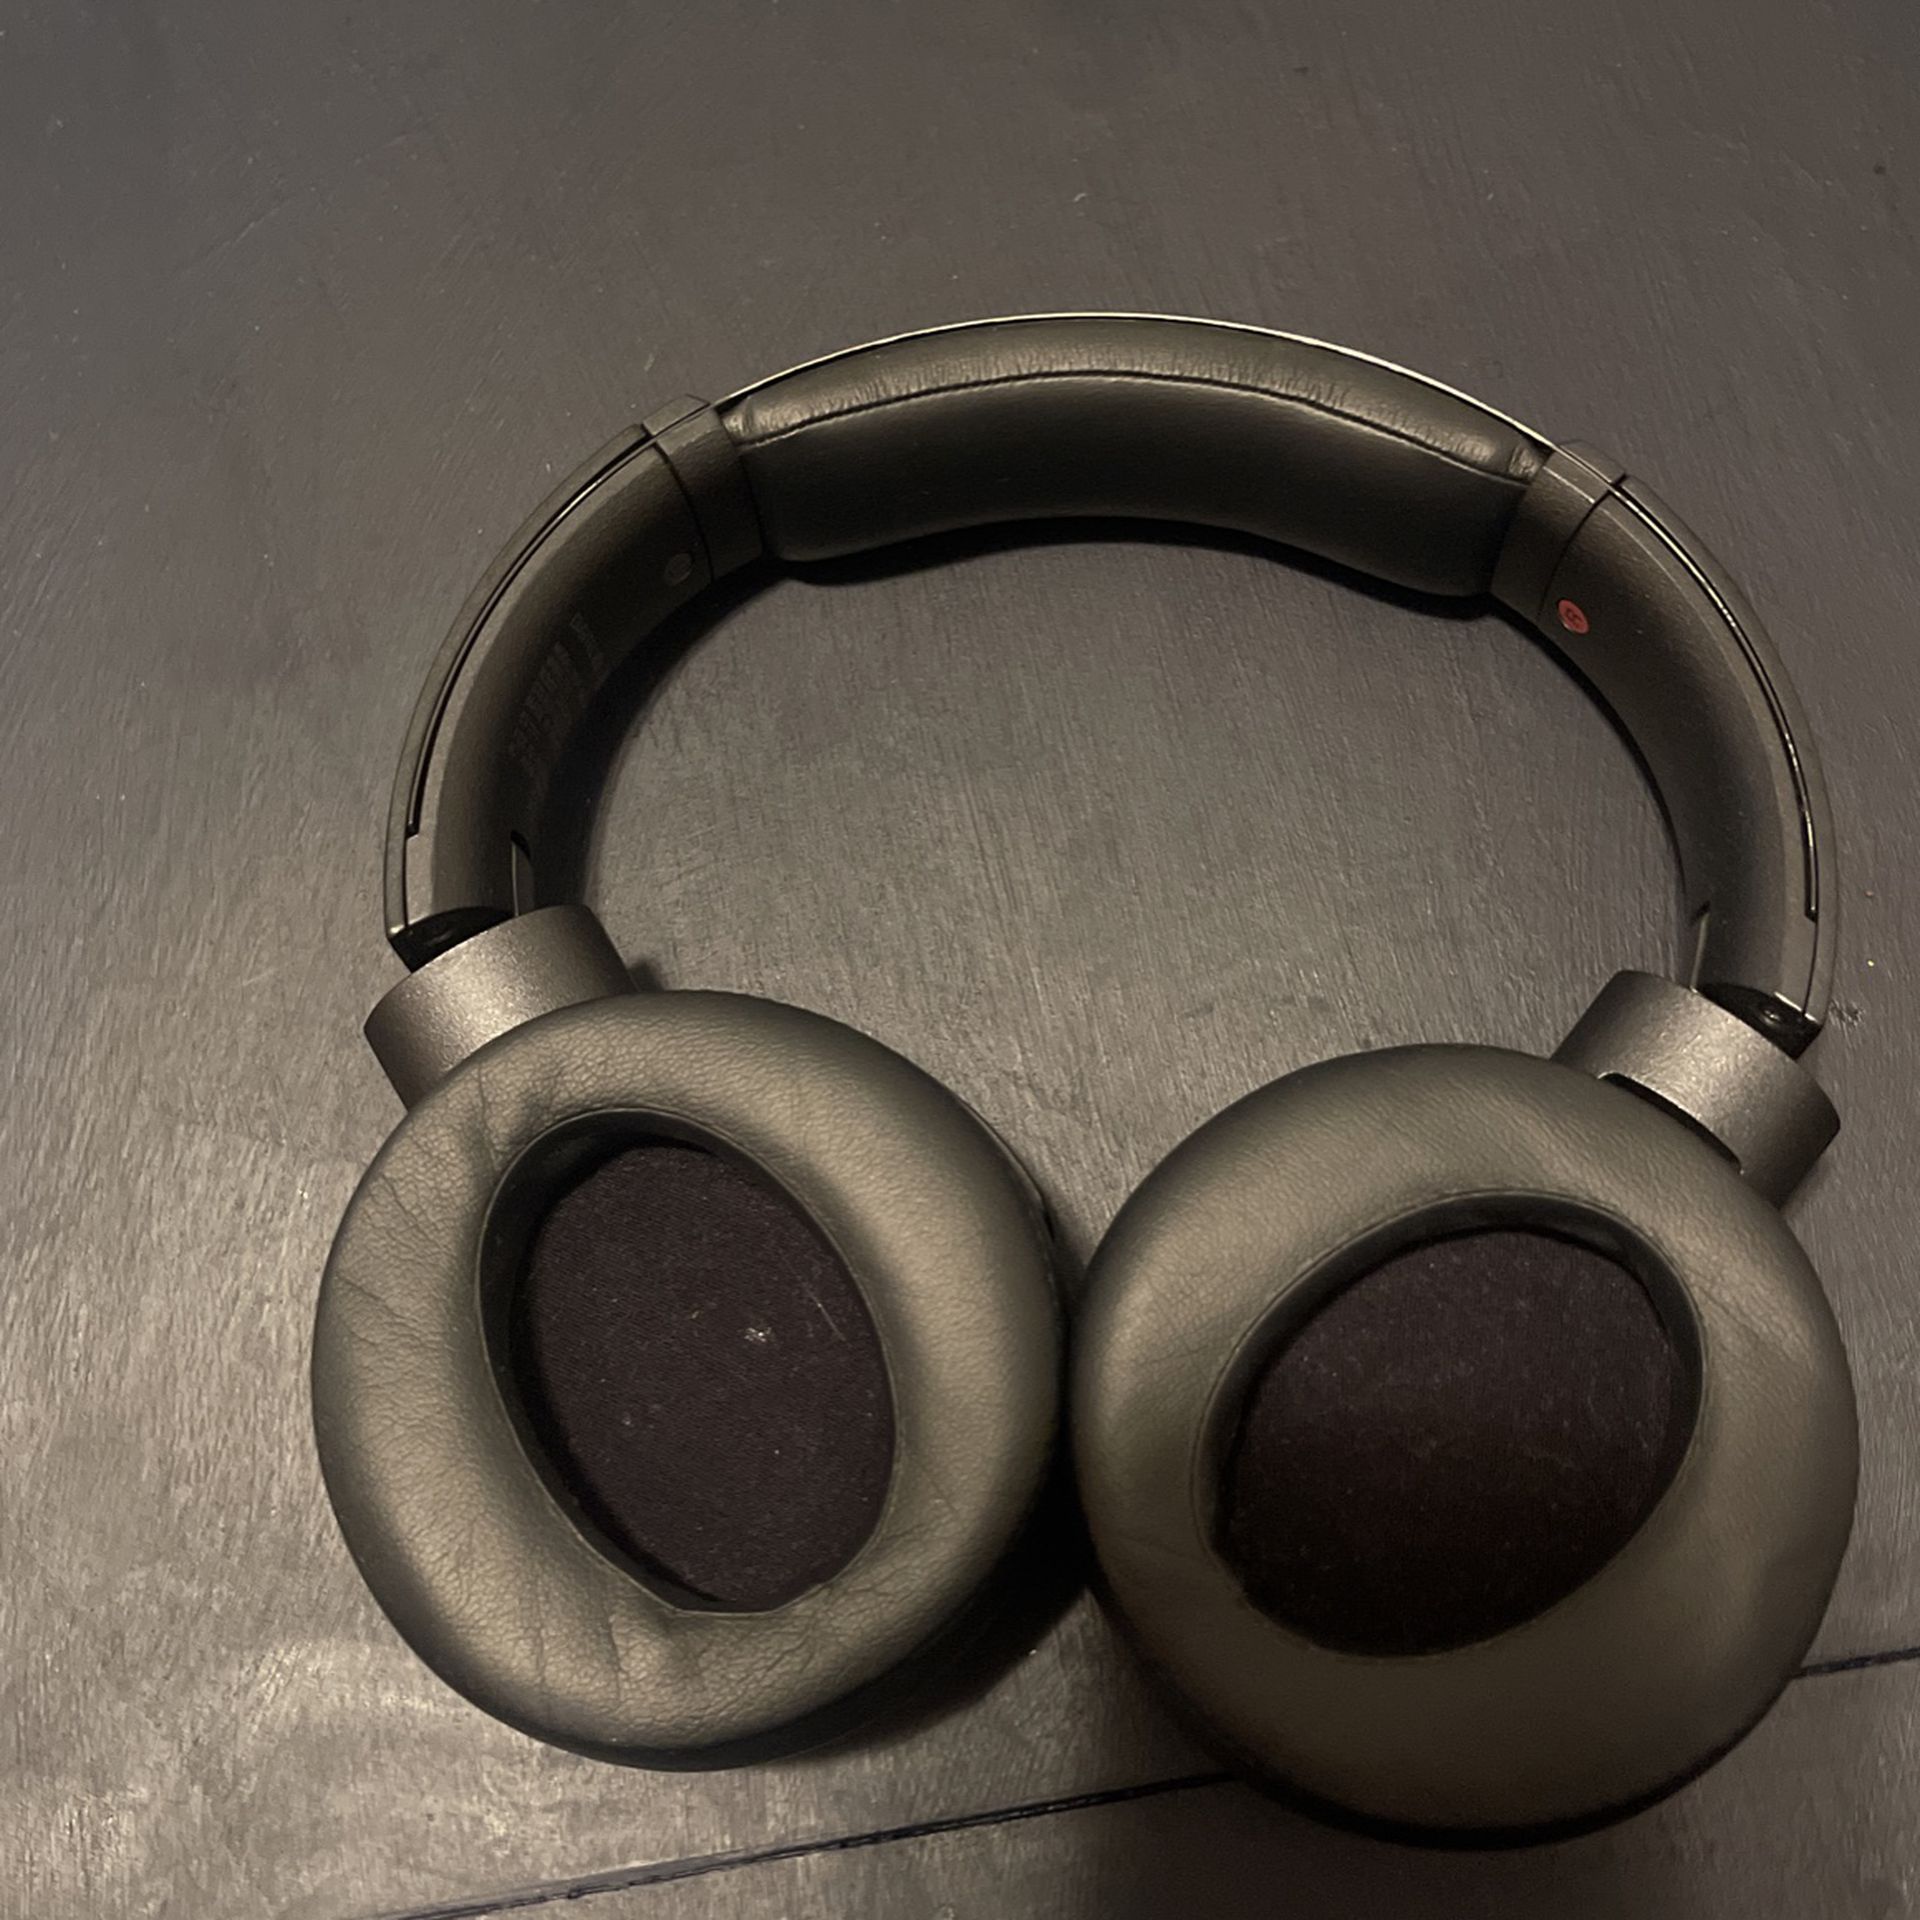 Sony Bass Boost Headphones Model: Mdrxb950n1